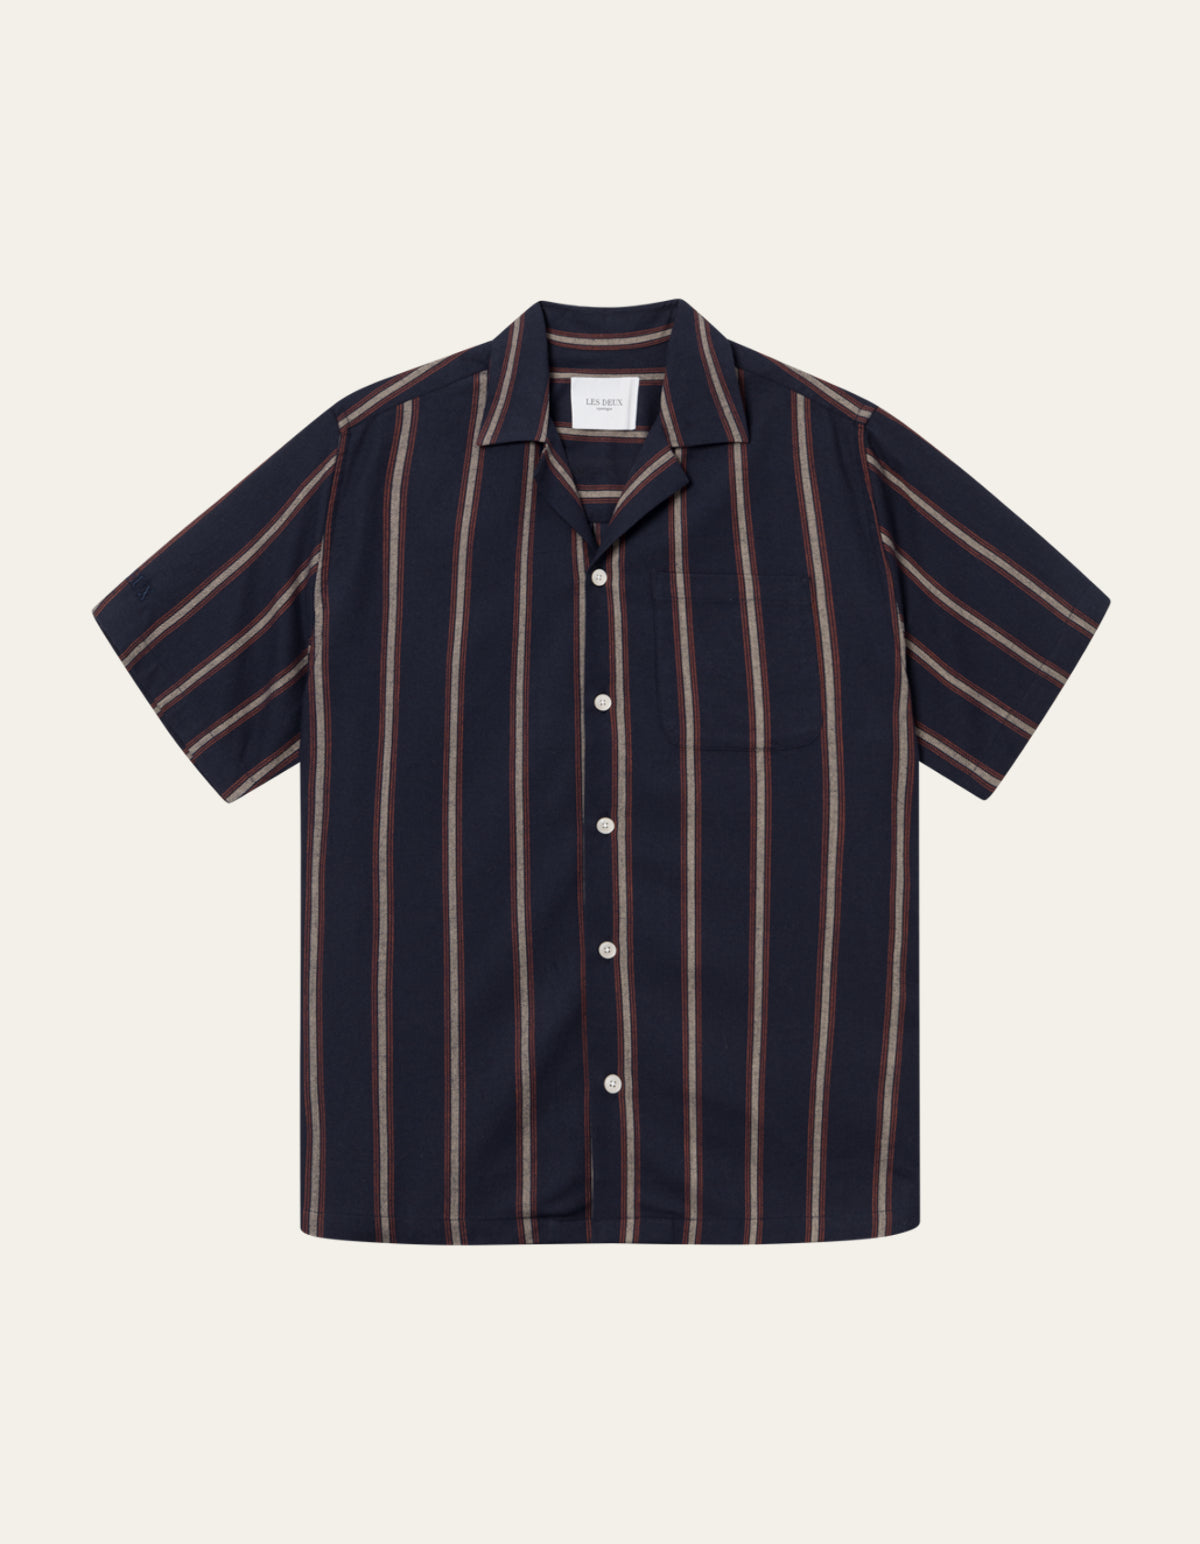 Lawson Stripe Shirt Dark Navy/Light Camel